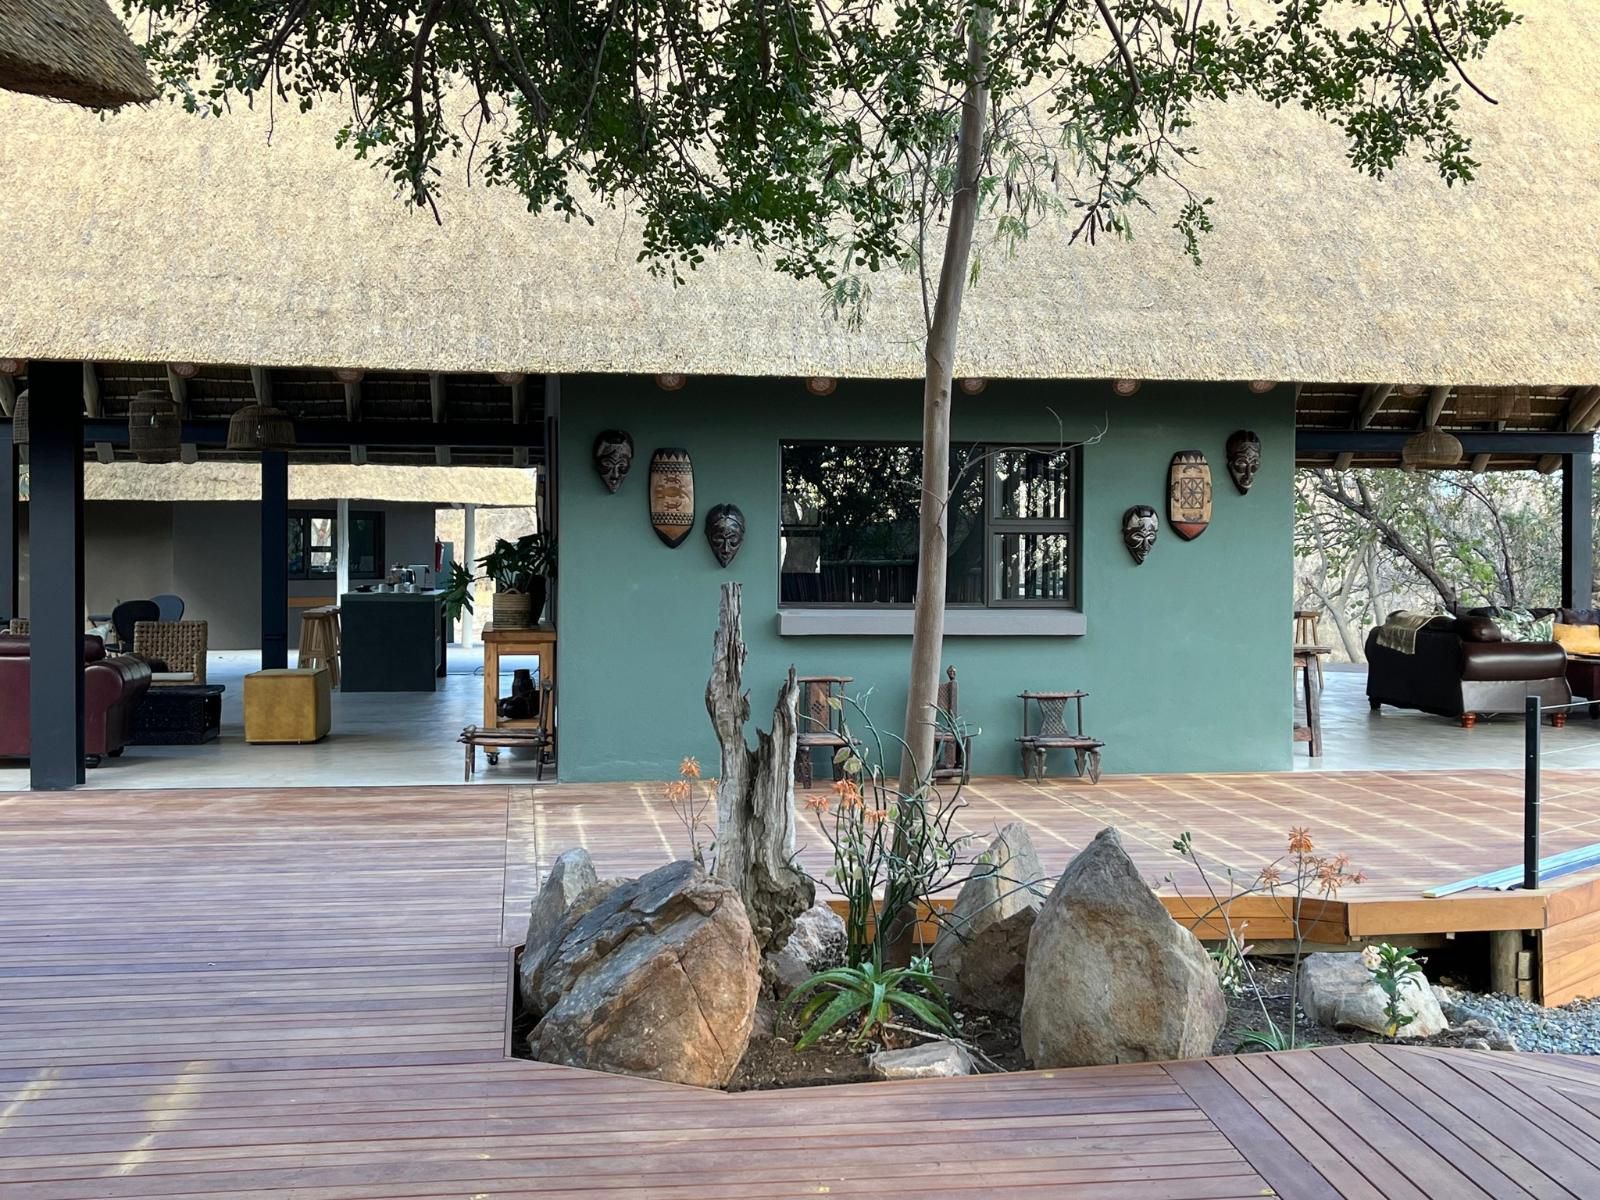 Kwenga Safari Lodge Balule Nature Reserve Mpumalanga South Africa House, Building, Architecture, Bar